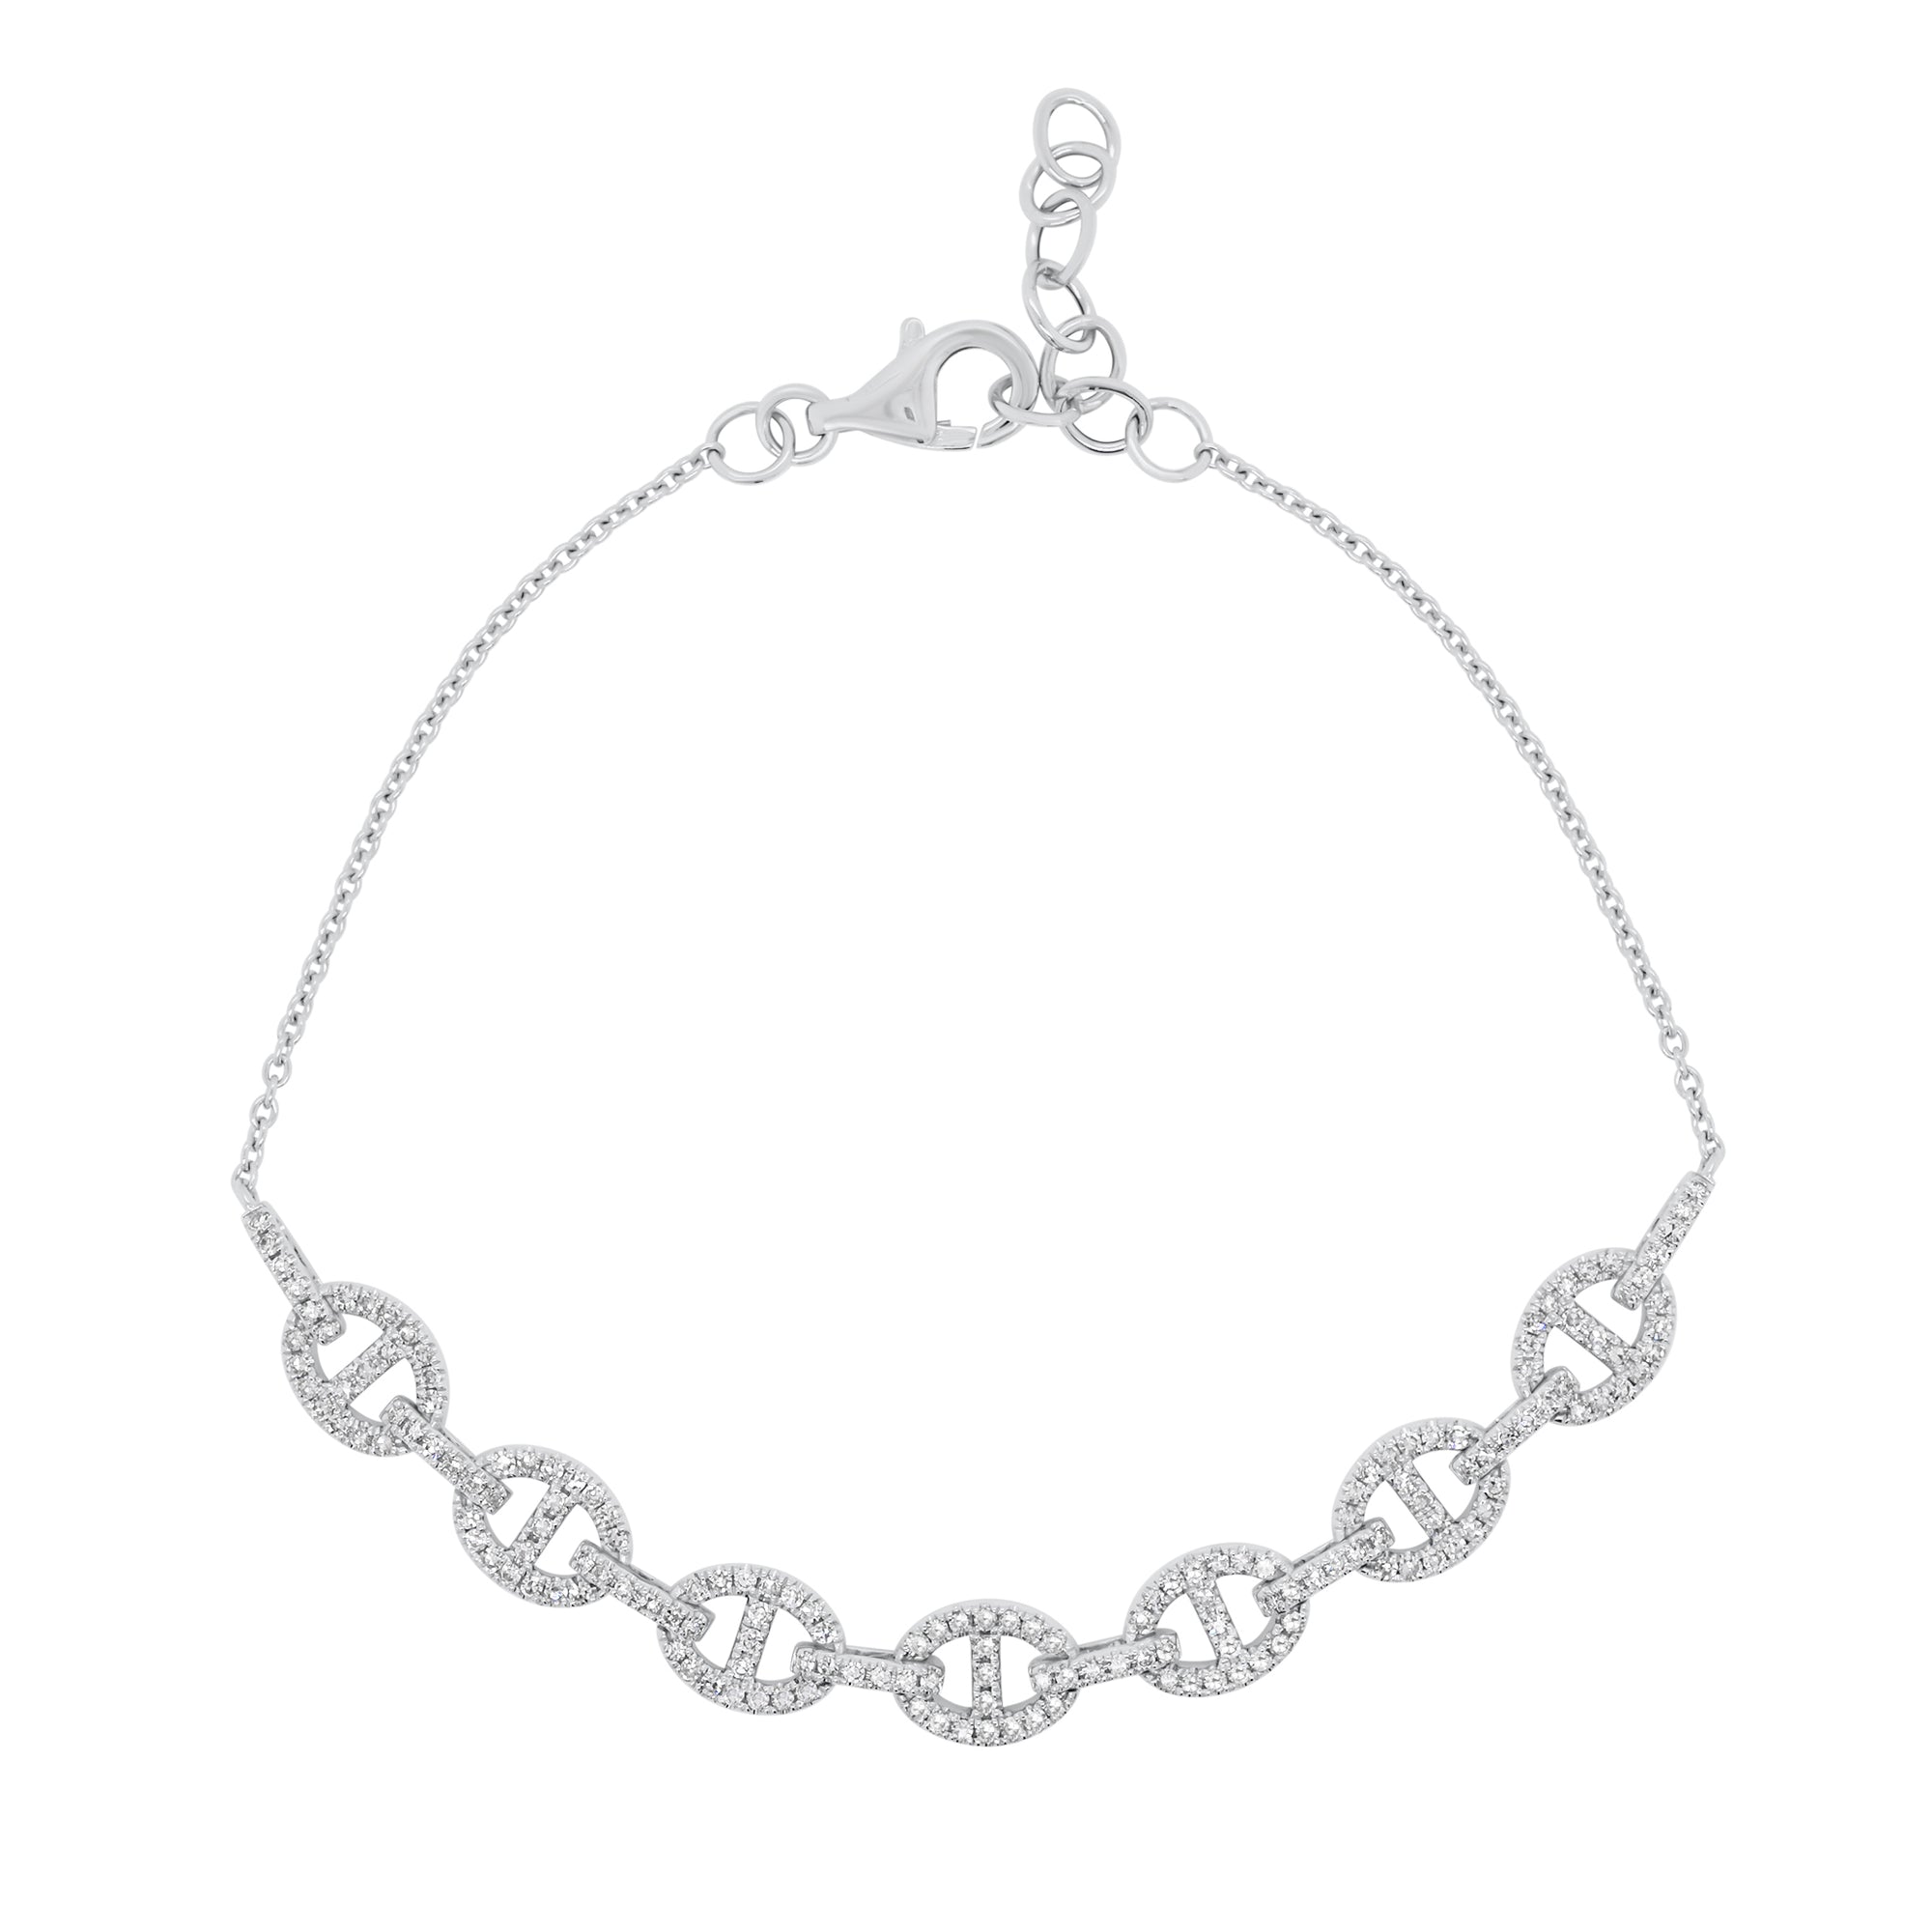 Diamond Tri-Link Fashion Bracelet - 14K white gold weighing 4.04 grams  - 167 round diamonds totaling 0.61 carats